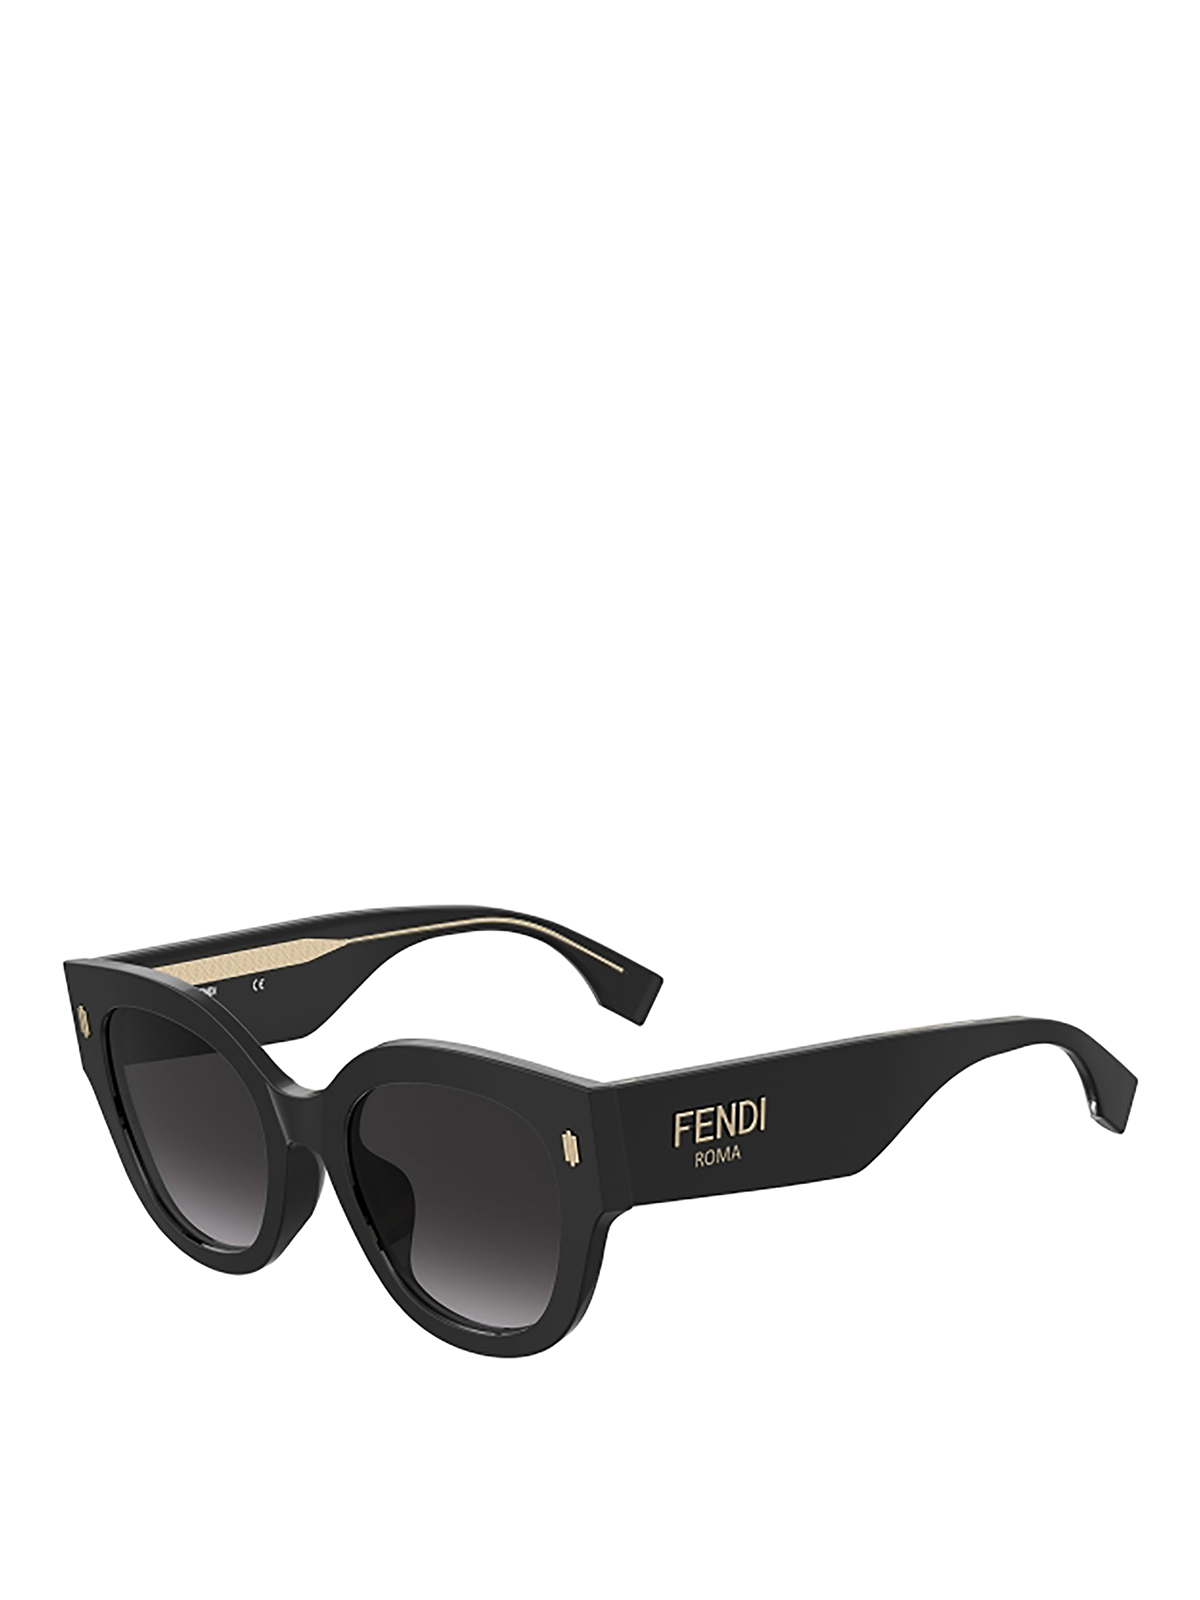 Fendi Roma Sunglasses In Black